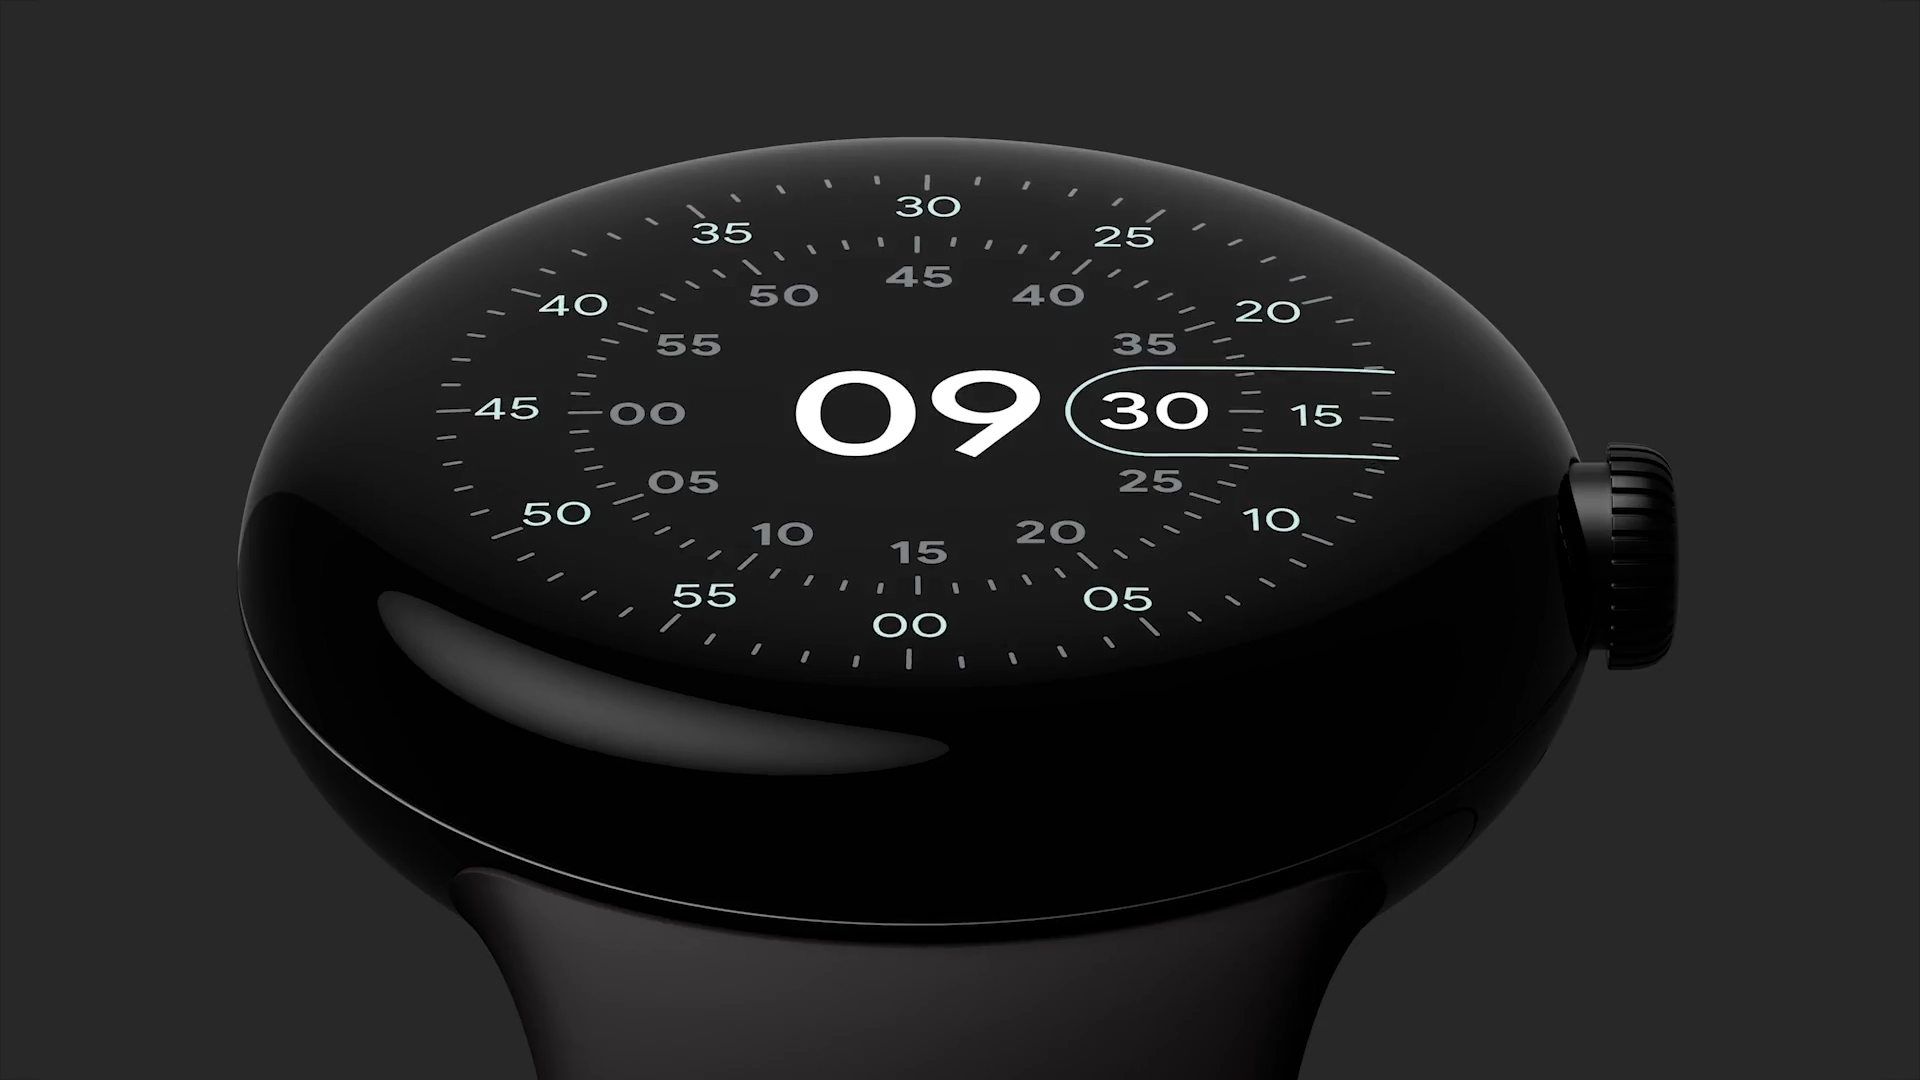 The Design of Google Pixel Watch 0-20 screenshot